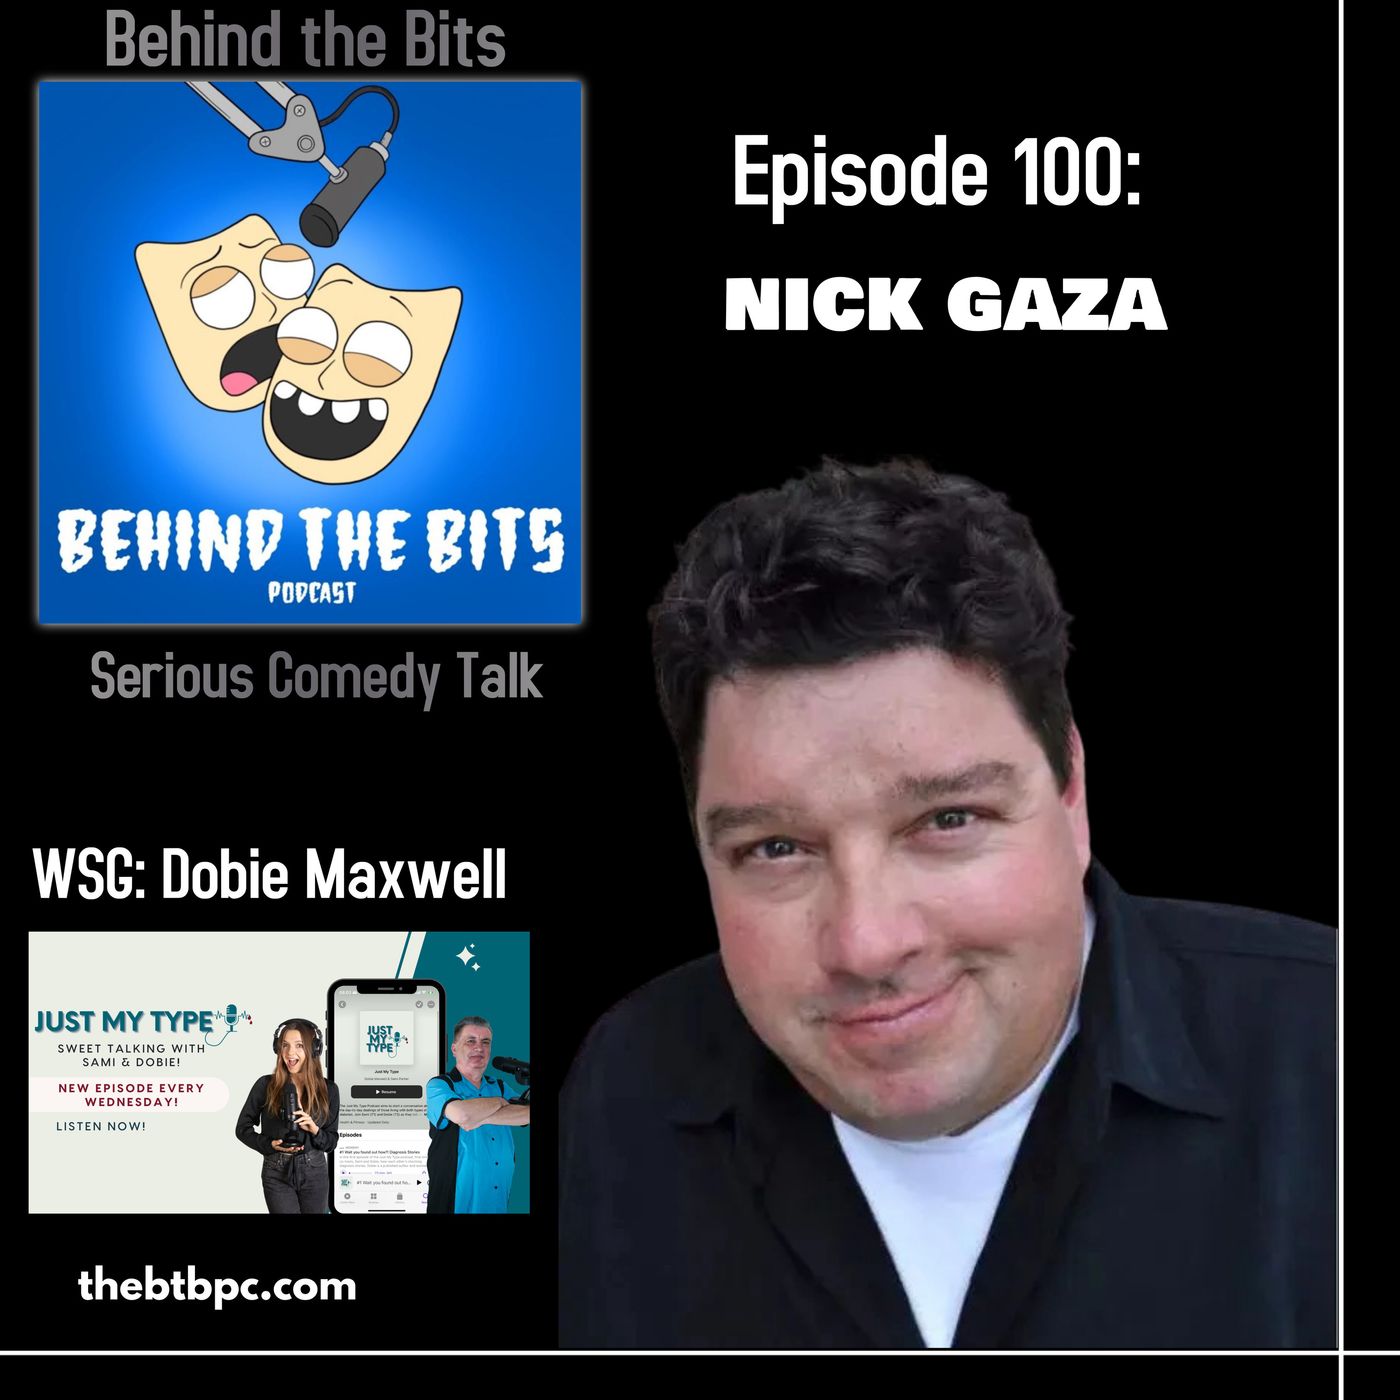 Episode 100: Nick Gaza WSG: Dobie Maxwell Image